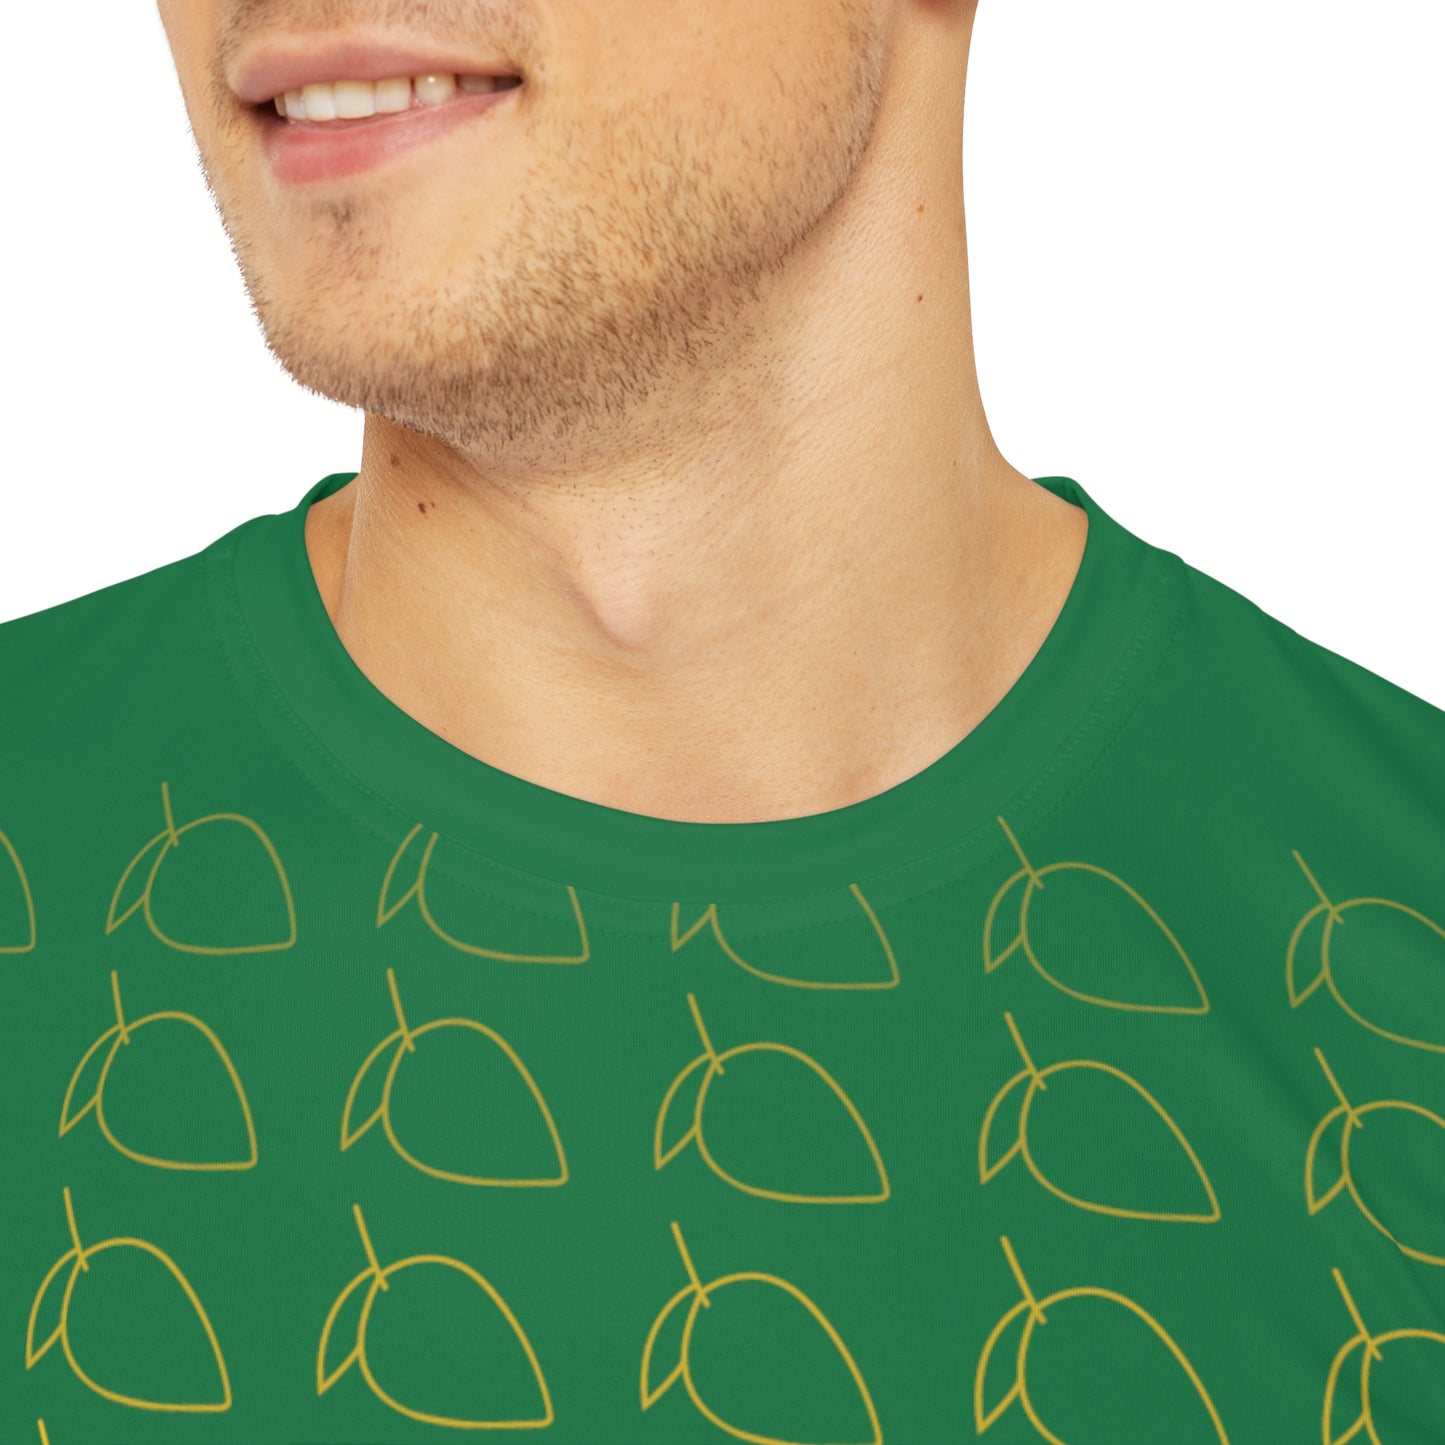 Peace Men's T-Shirt (Green)